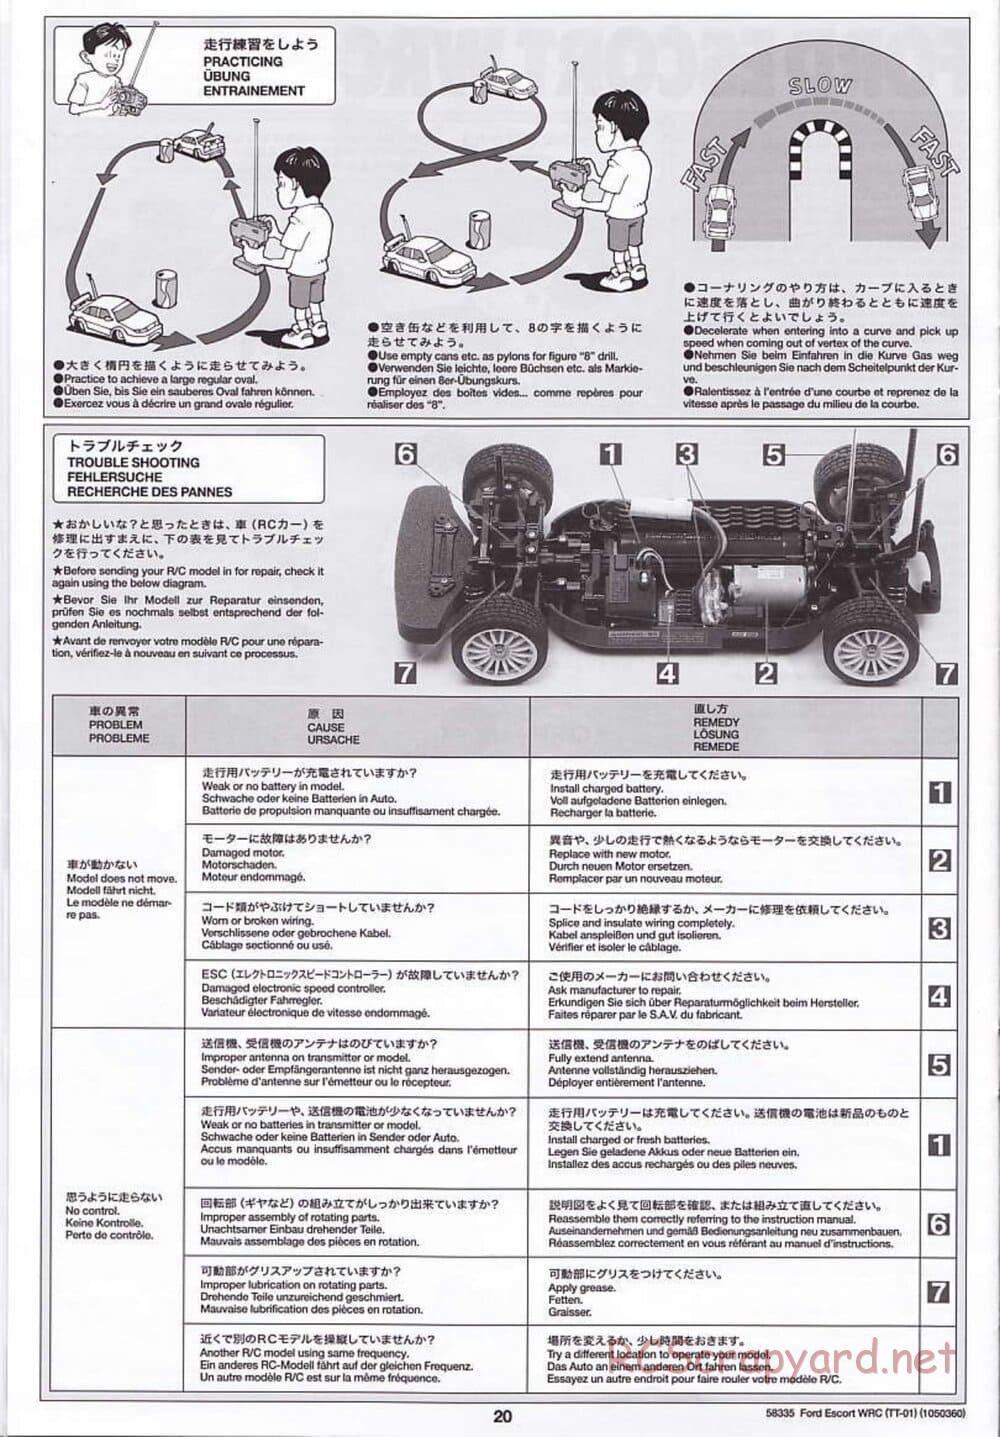 Tamiya - Ford Escort WRC - TT-01 Chassis - Manual - Page 20